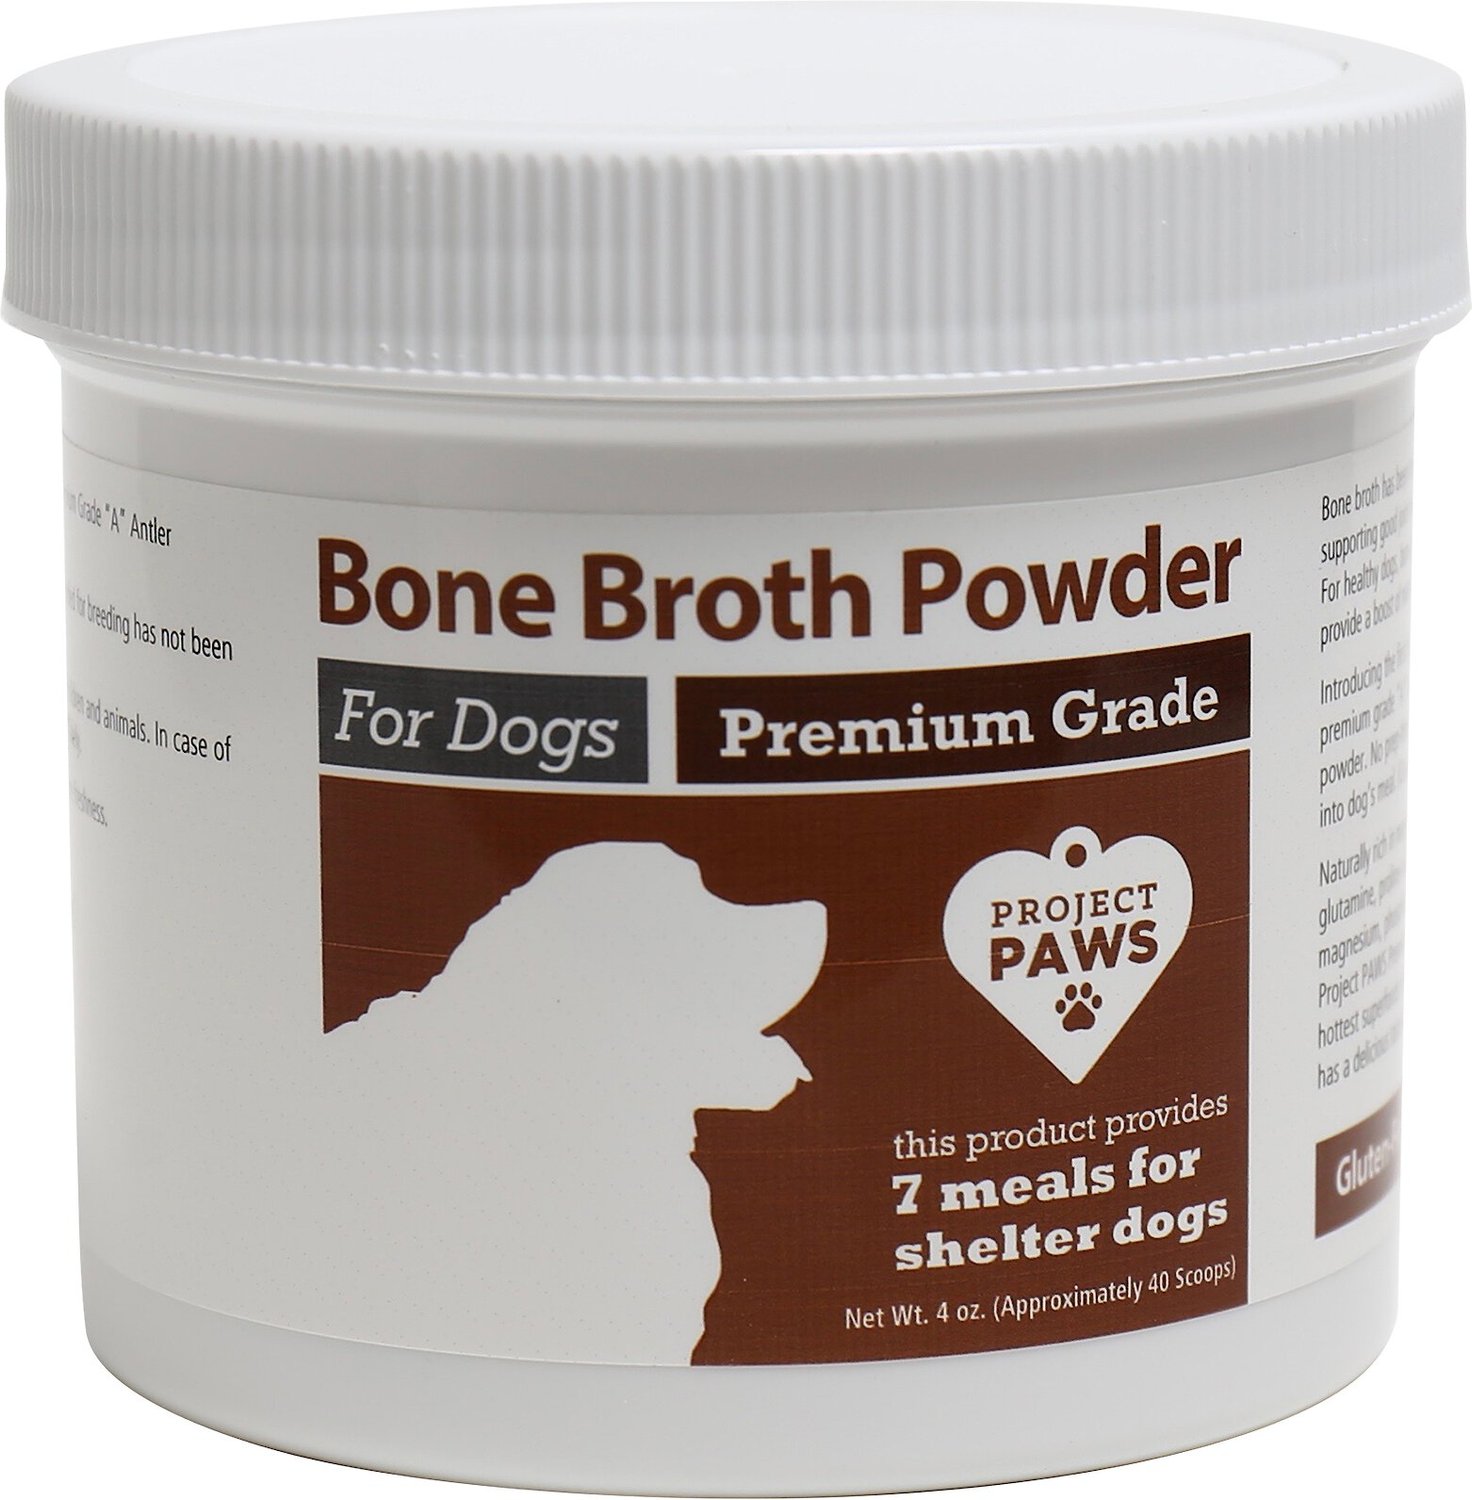 PROJECT PAWS Premium Grade Bone Broth 